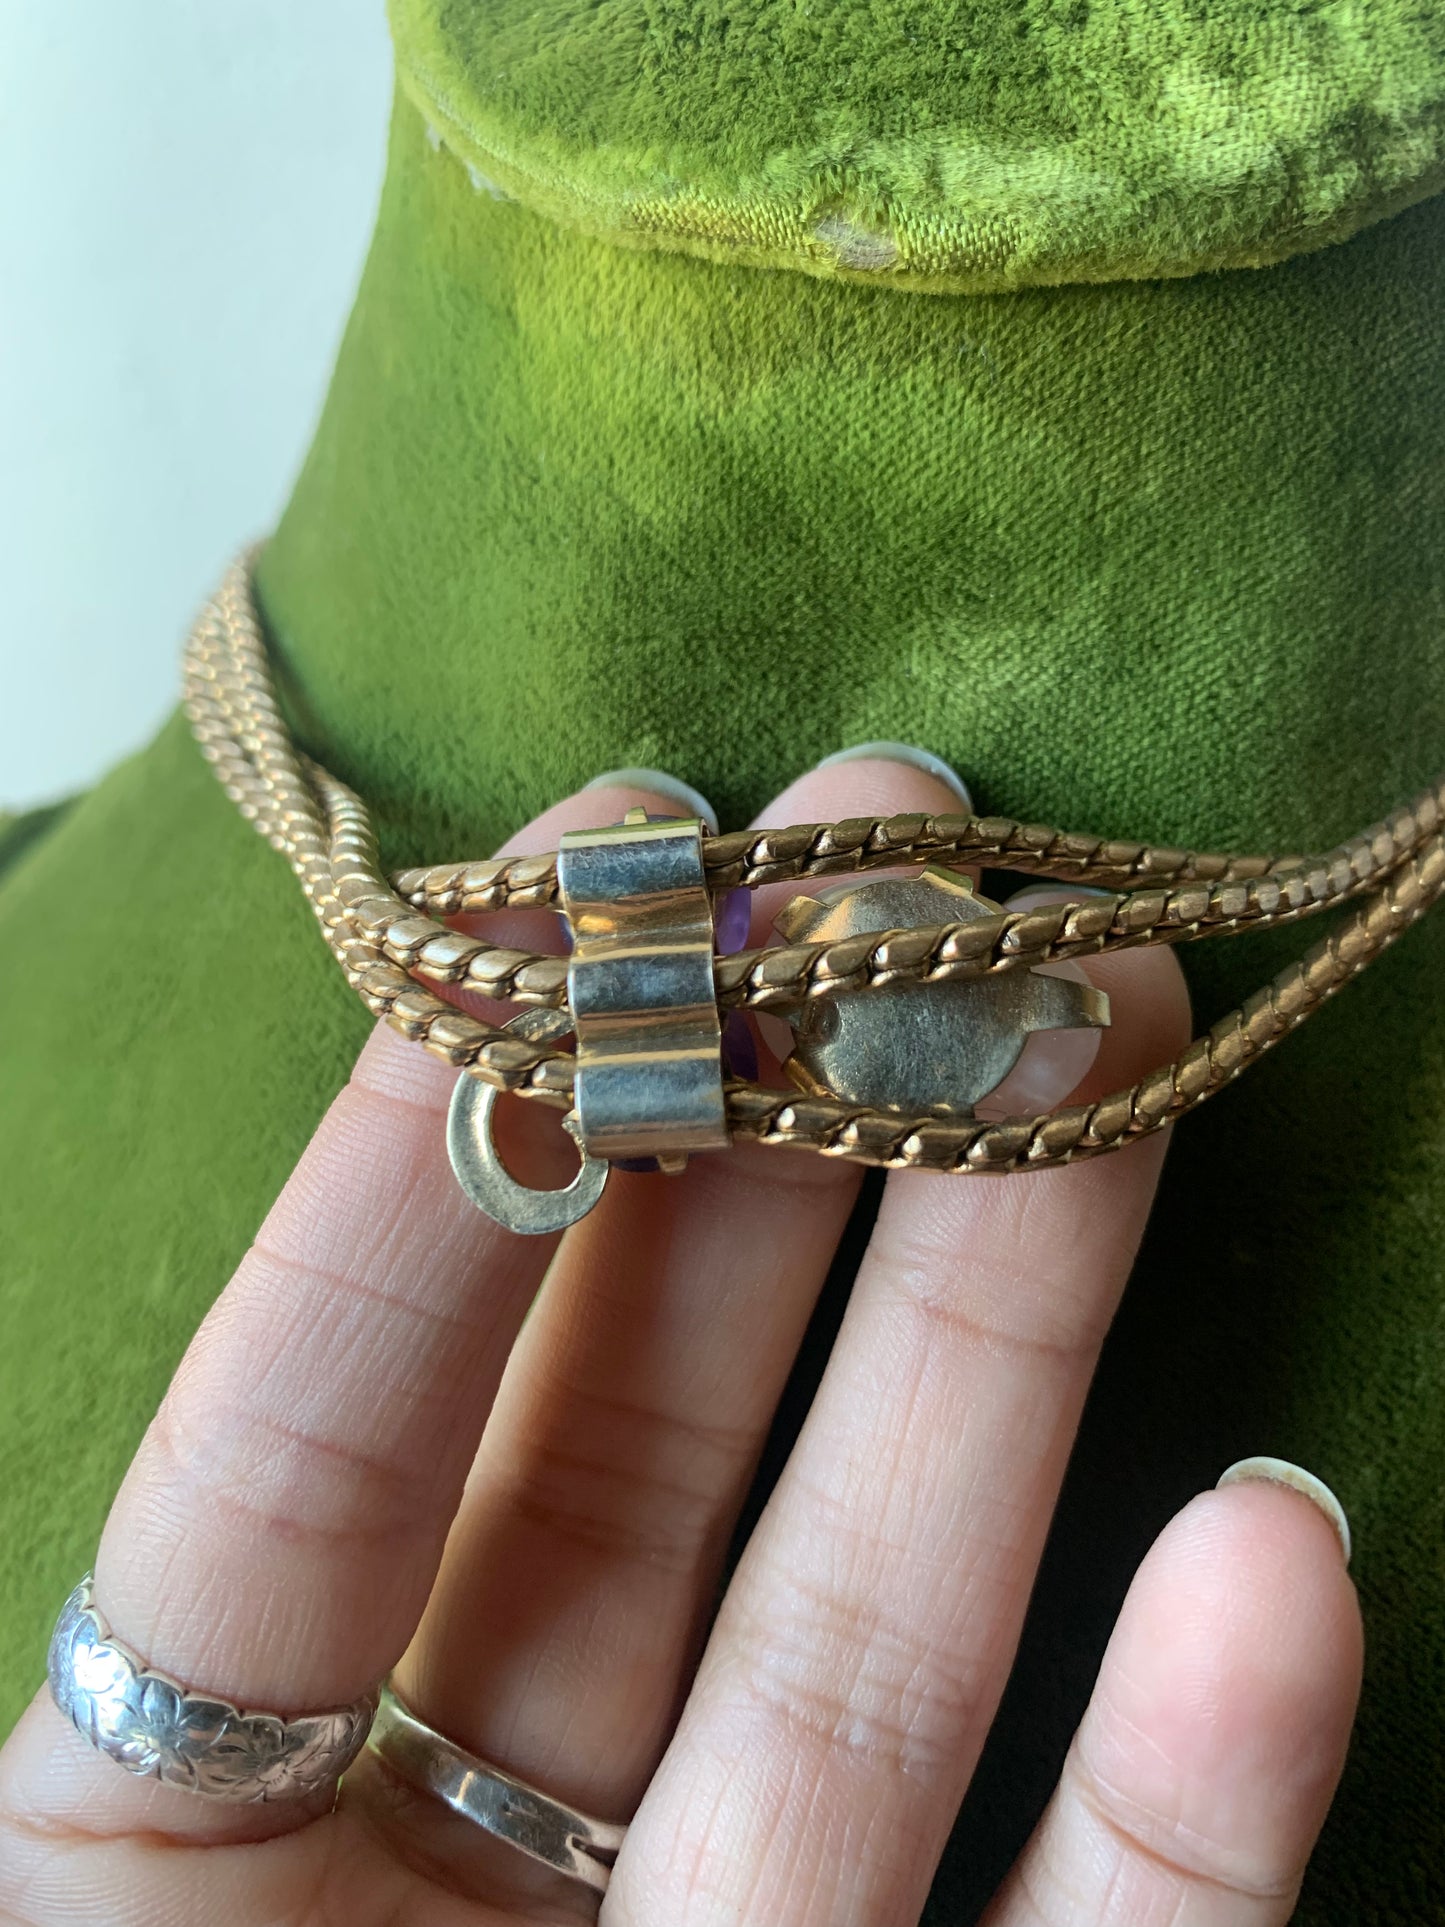 Goldtone Choker with Purple Stone Pendant